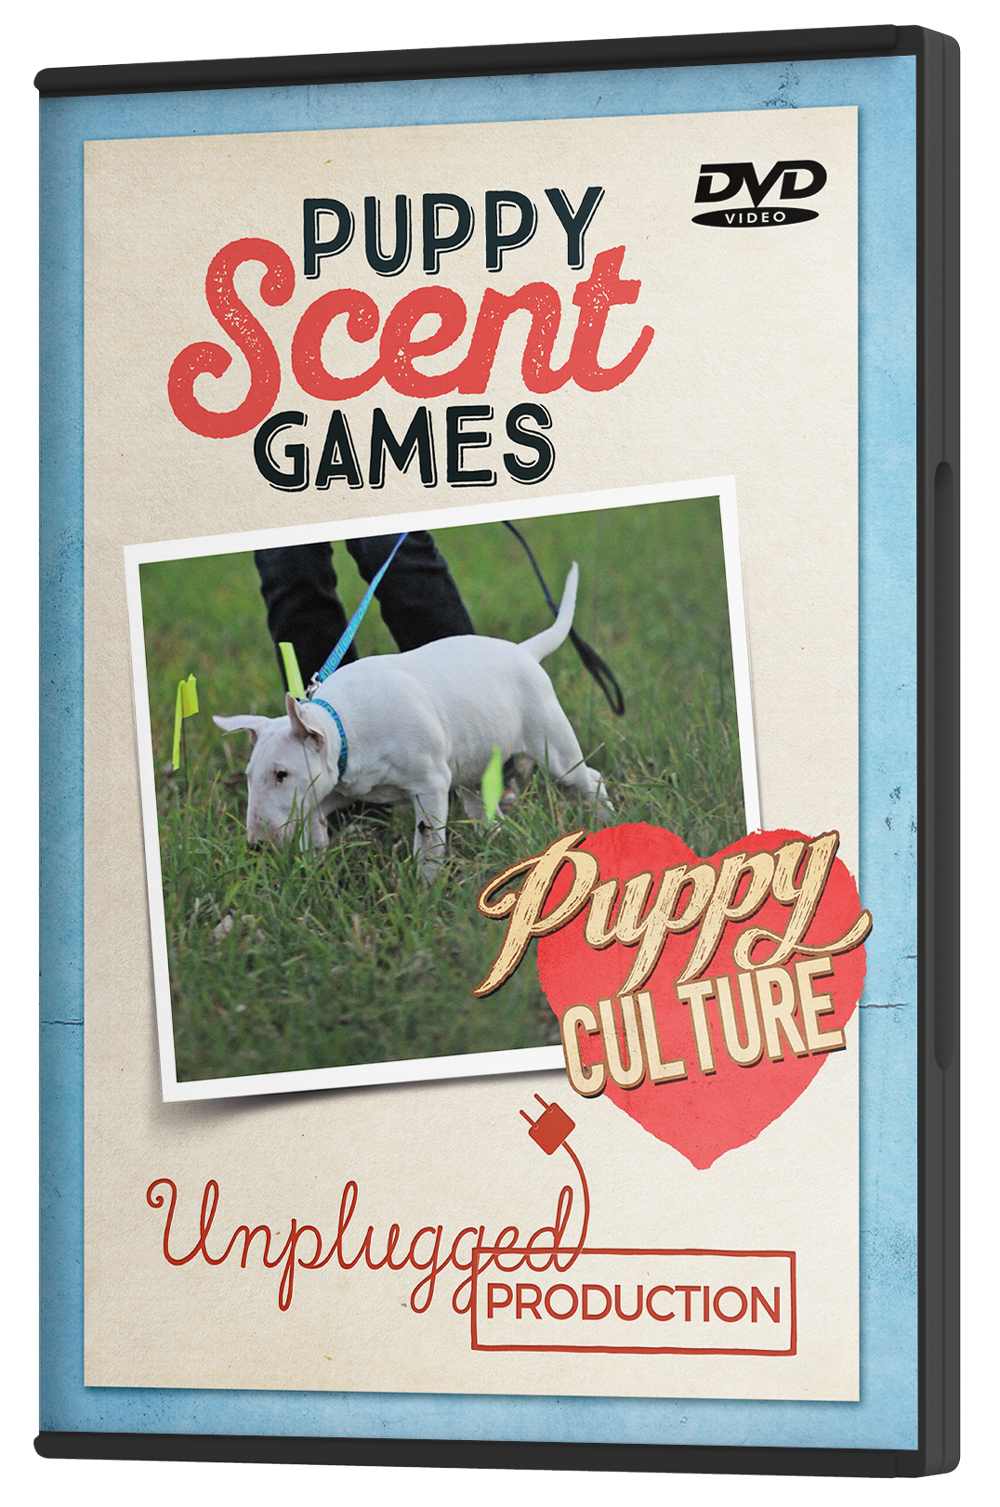 Puppy Scent Games (DVD format)